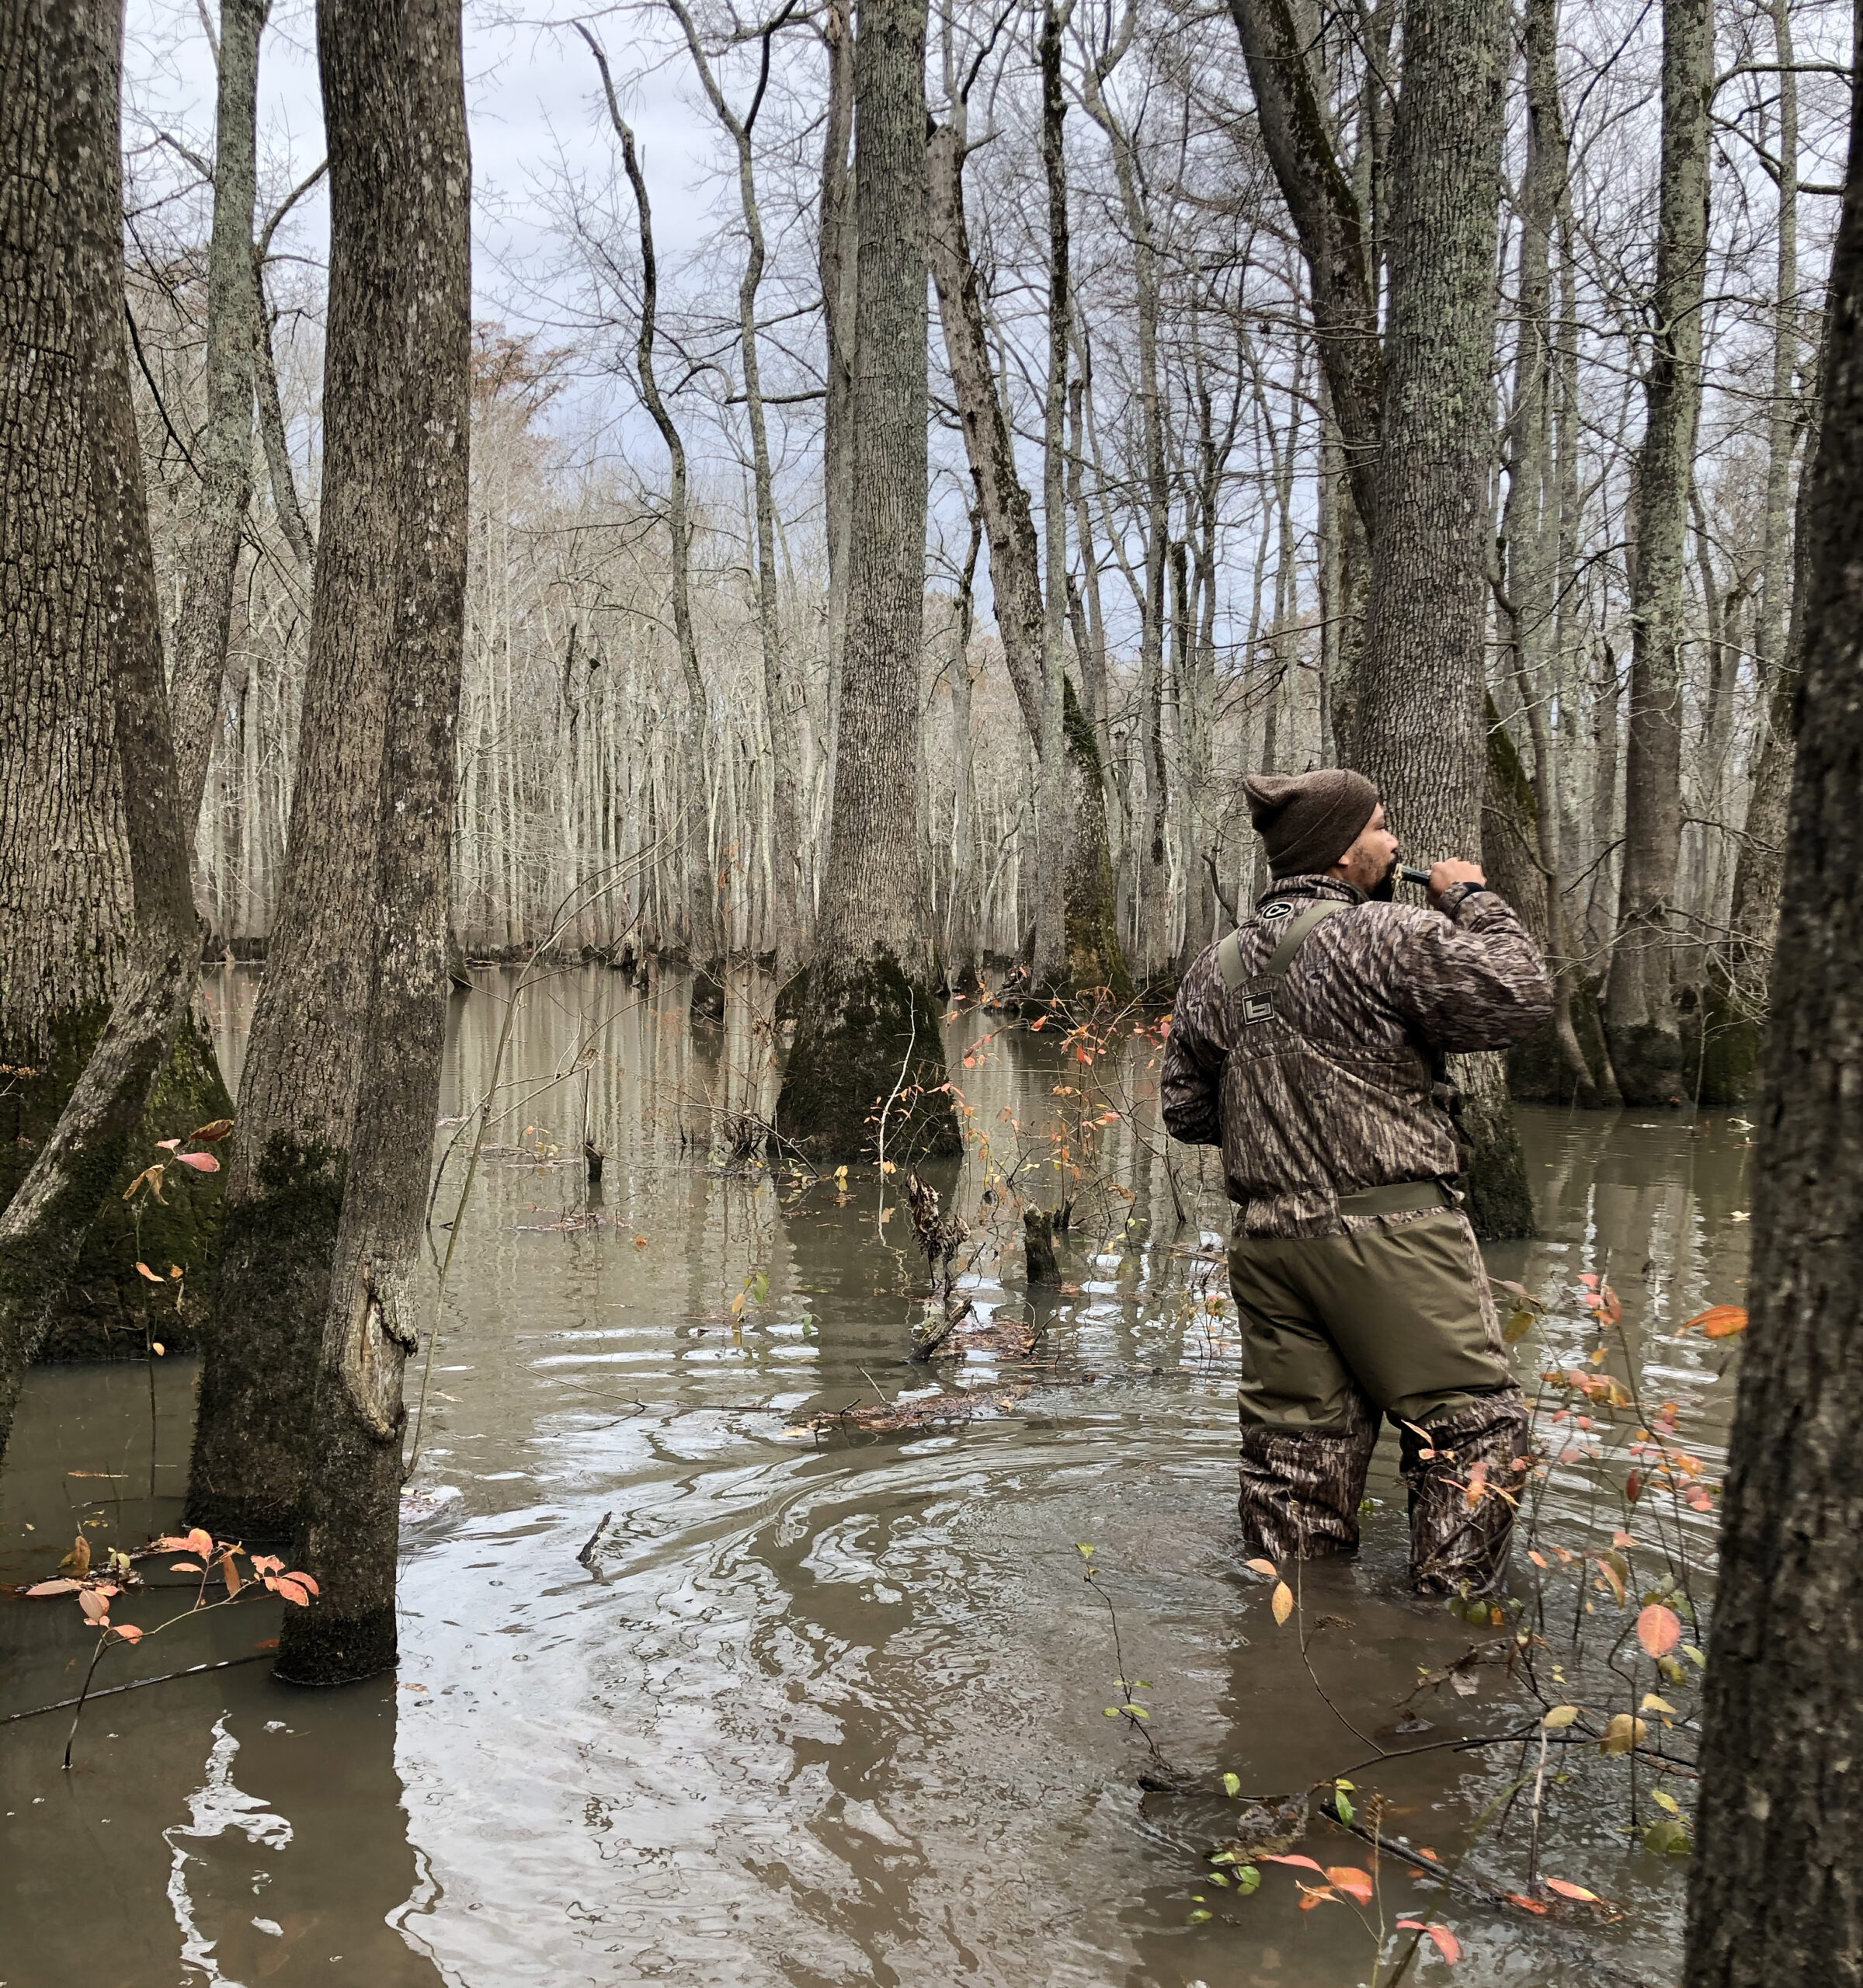 An Arkansas duck hunter in camo waders calls to mallards as he hunts timber.